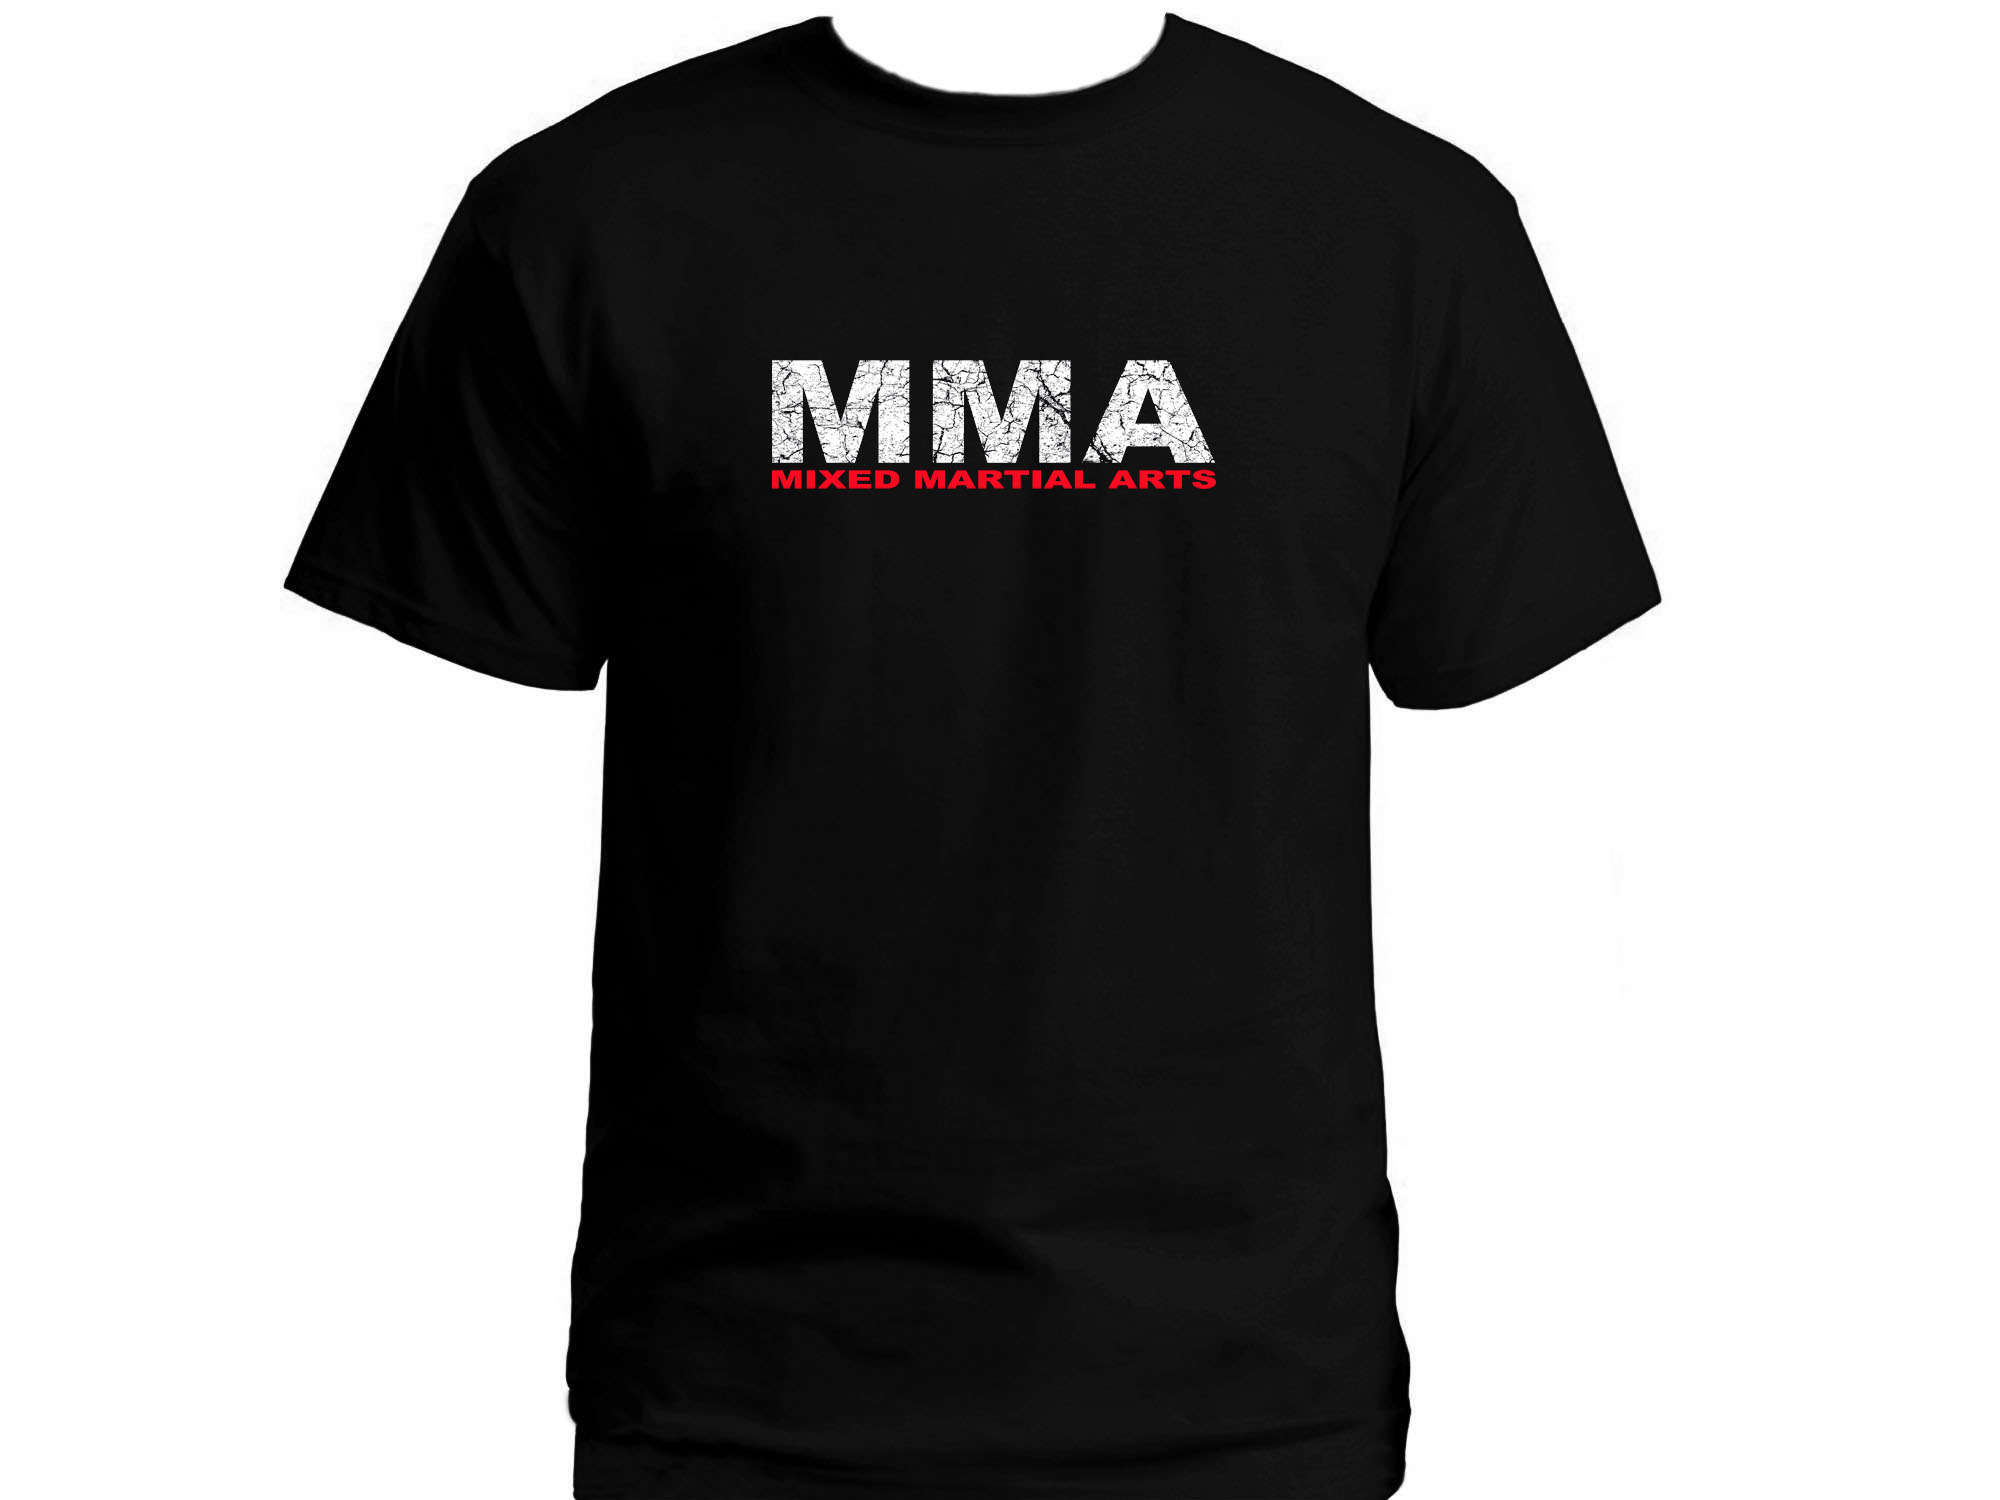 MMA mixed martial arts - My Cool T-Shirt